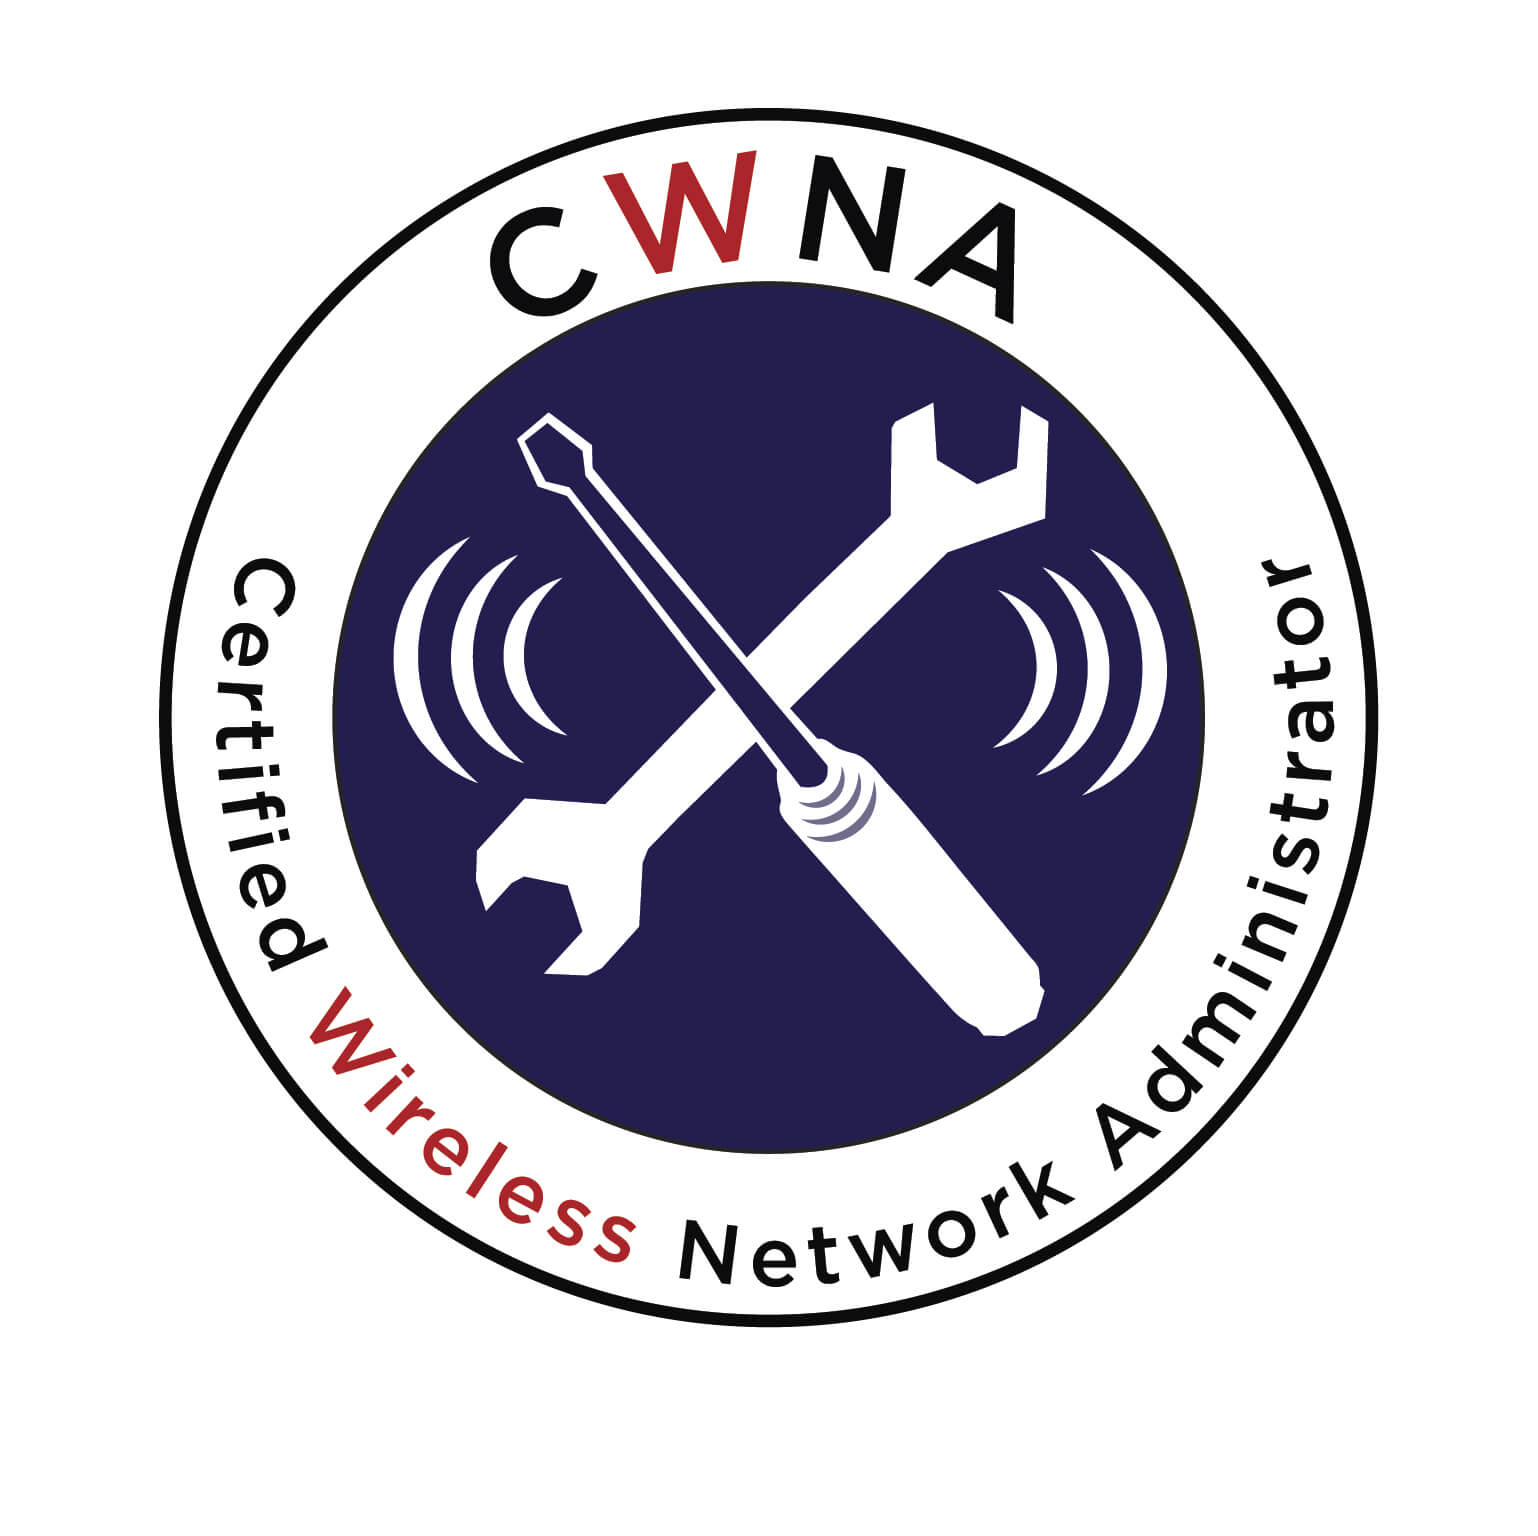 Rene van der Klis CWNA -Certified Wireless Network Administrator